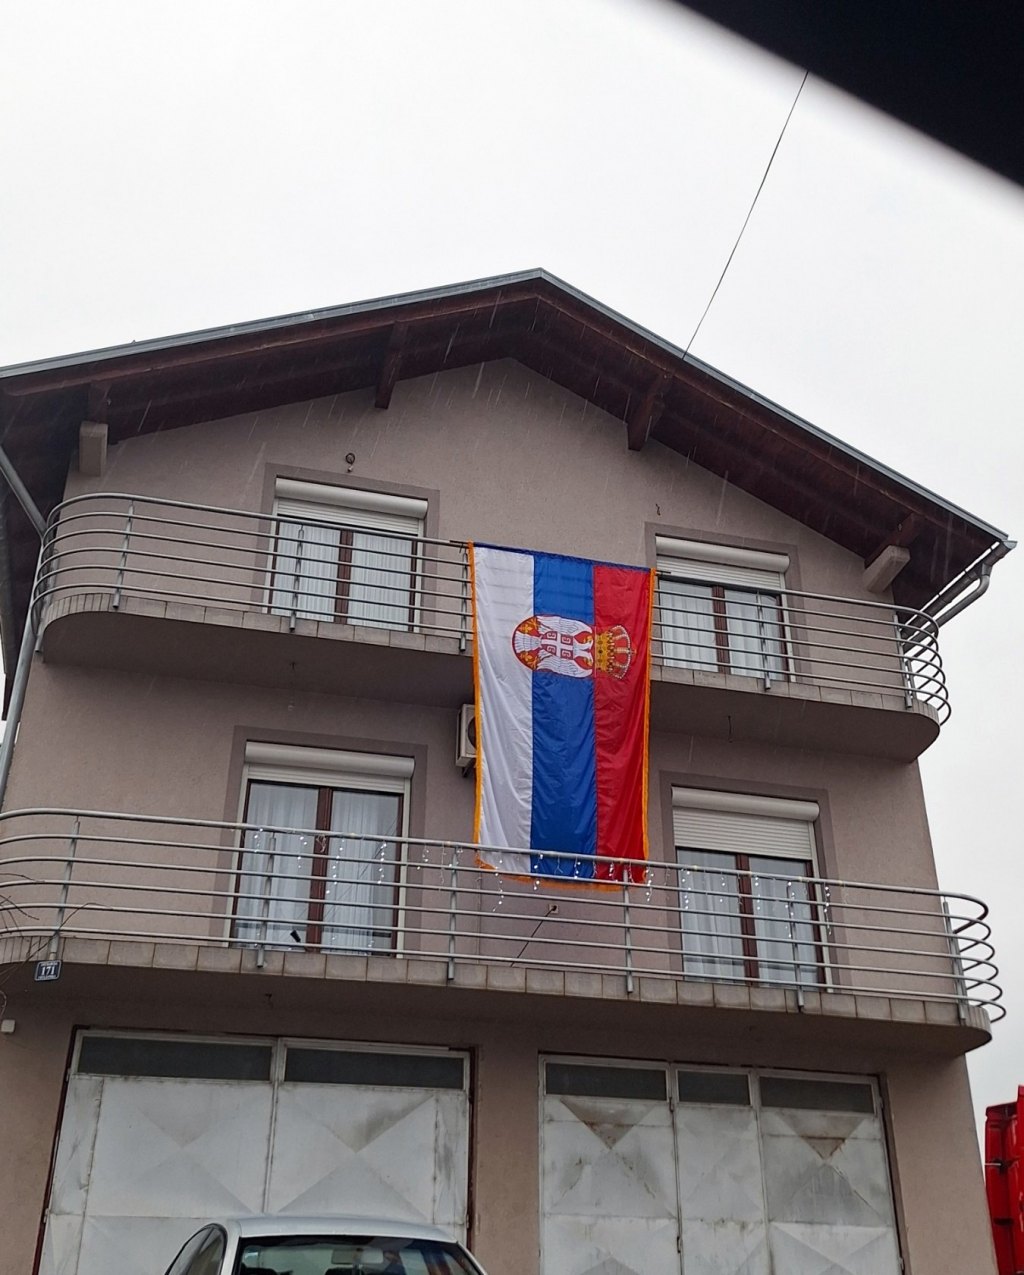 Kuljani, Banja Luka (foto: Dragiša Kovačević)